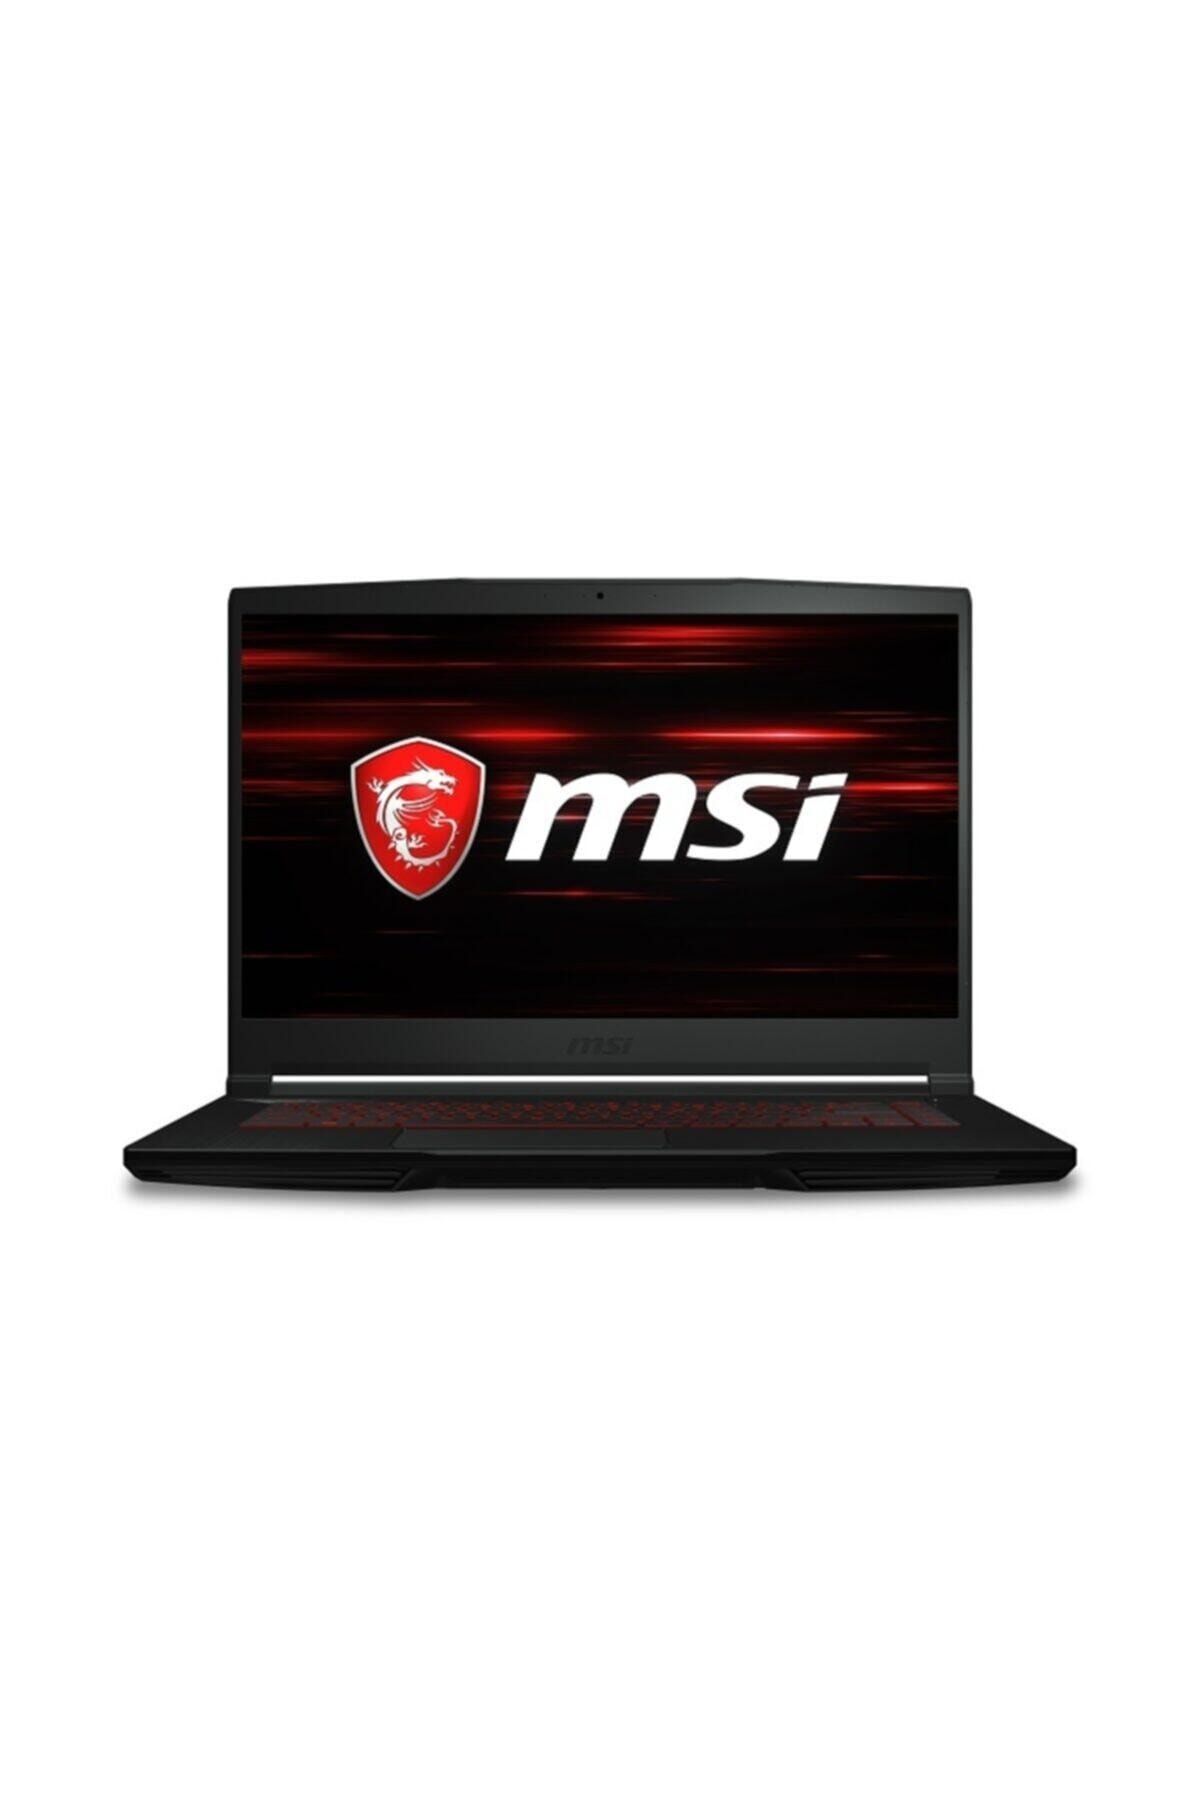 MSI GF63 THIN 9SCXR-620XTR Intel Core i7 9750H 8GB 512GB SSD GTX1650 Freedos 15.6" FHD